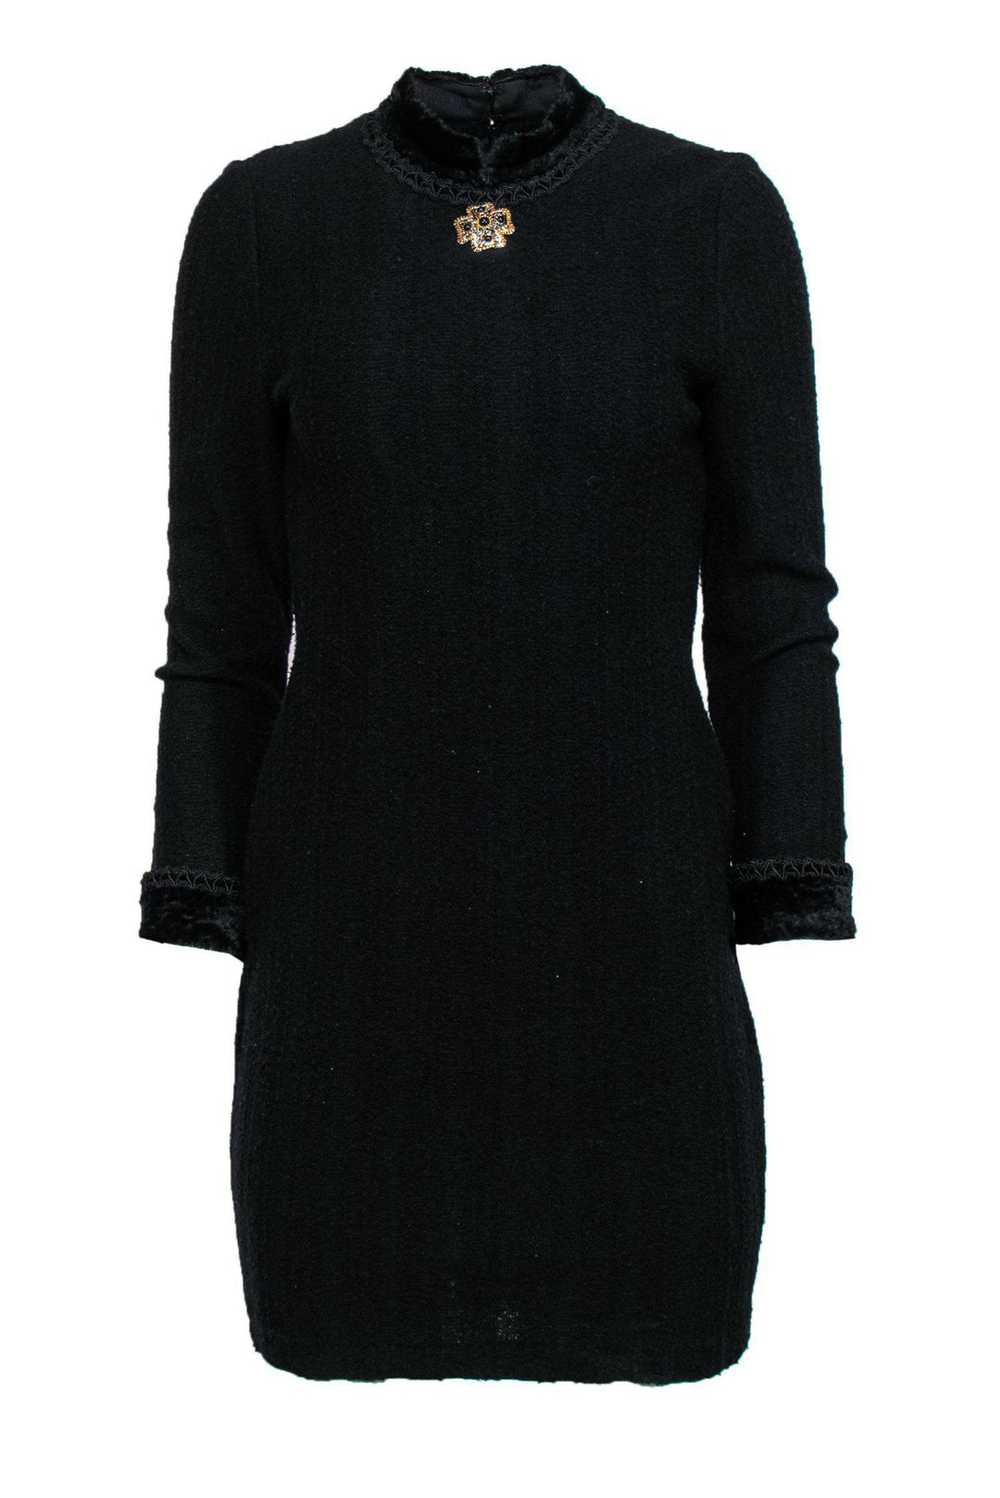 St. John - Black Vintage Wool Mock Neck Dress w/ … - image 1